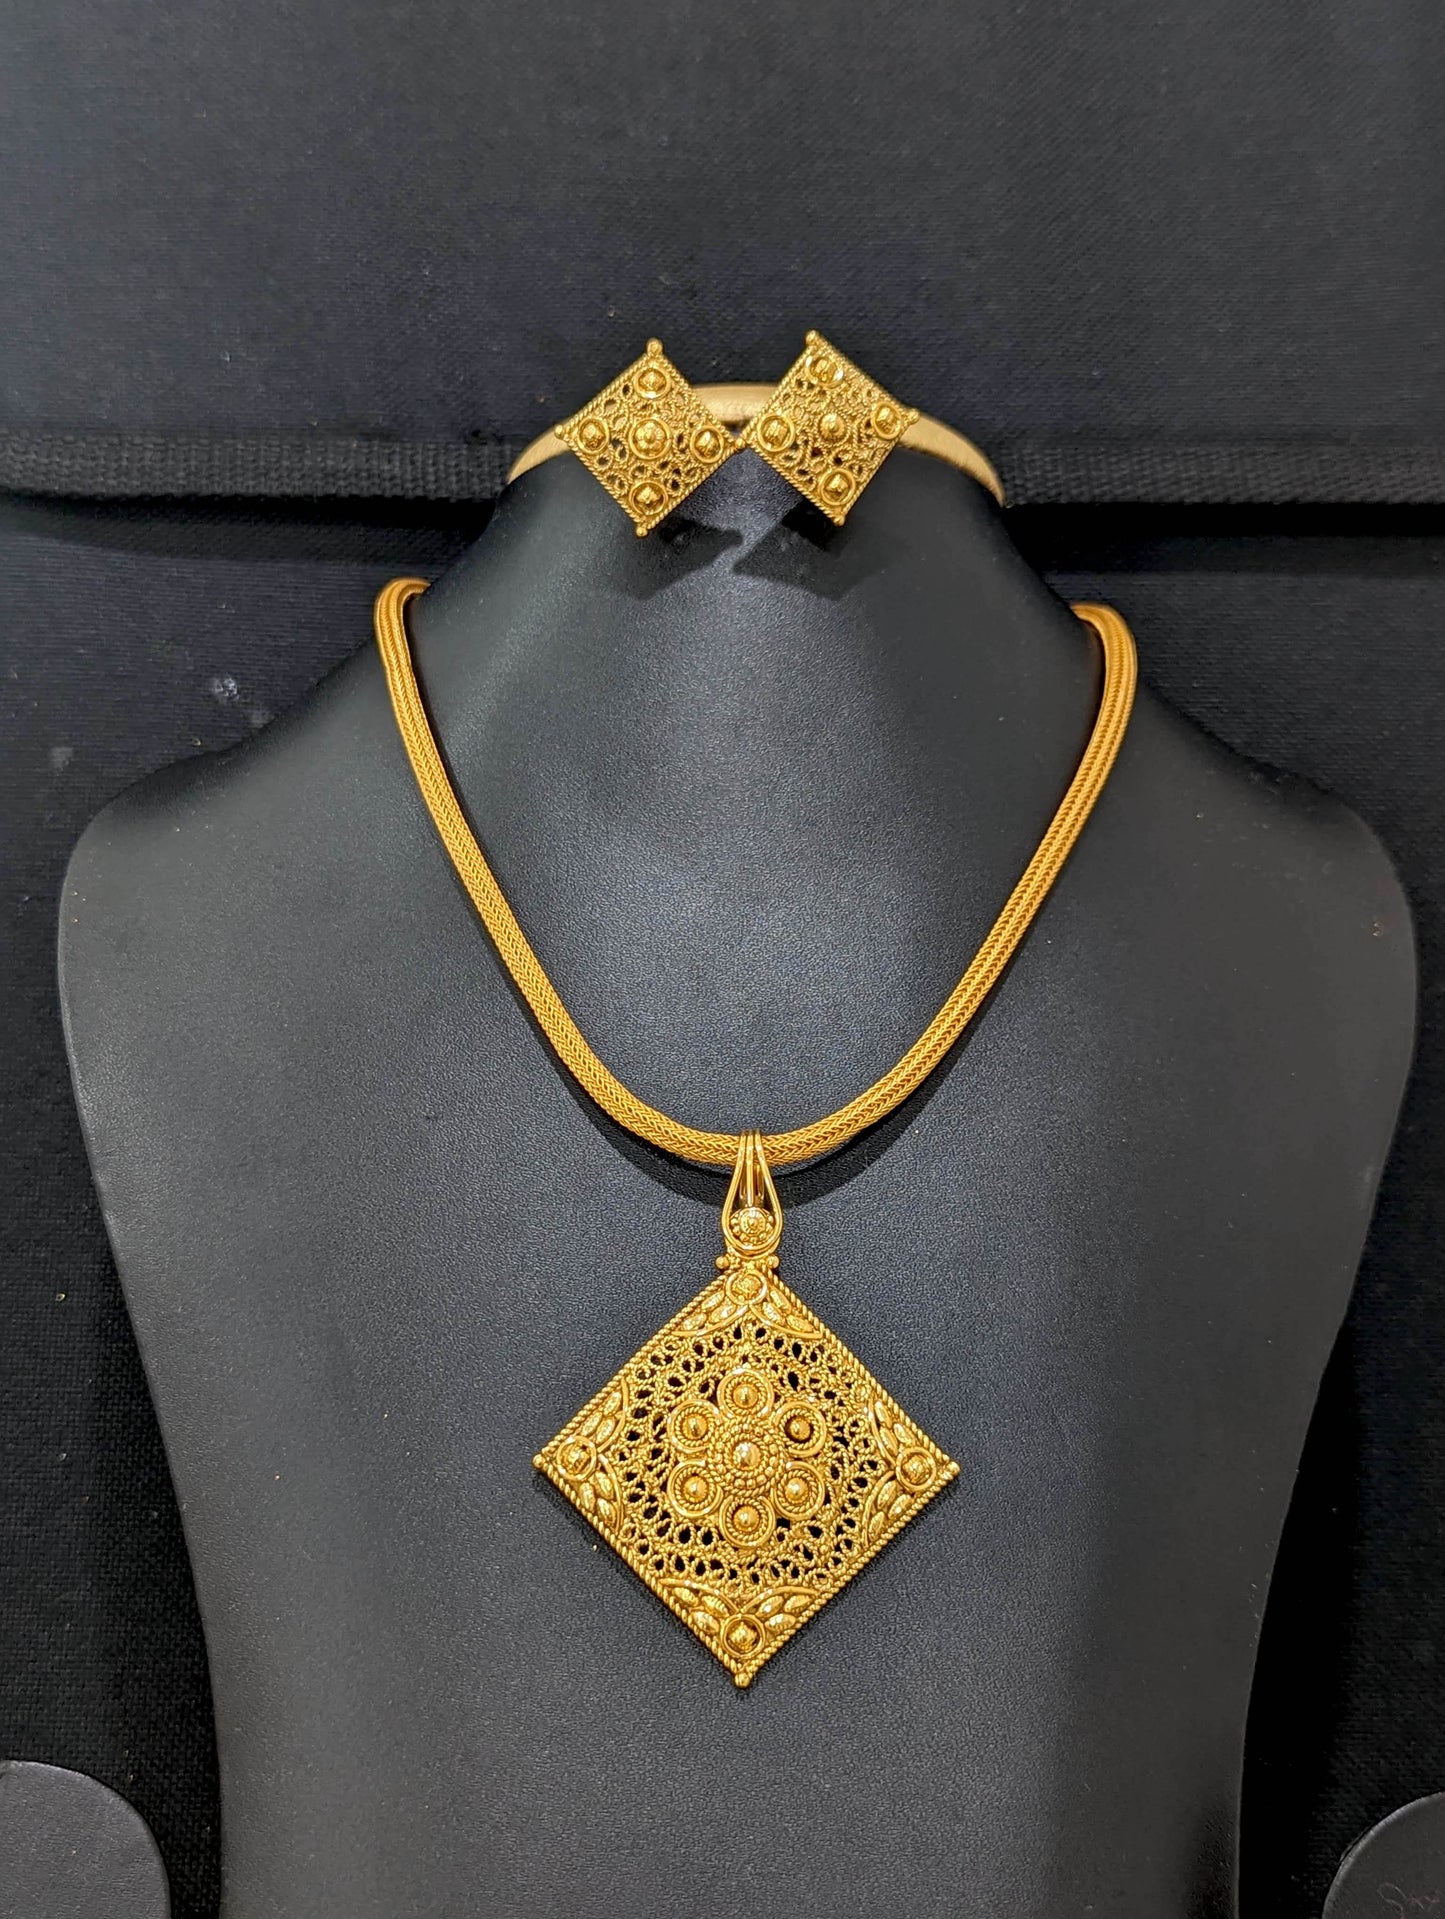 Gold look alike Pendant and Earrings Set - Design 5